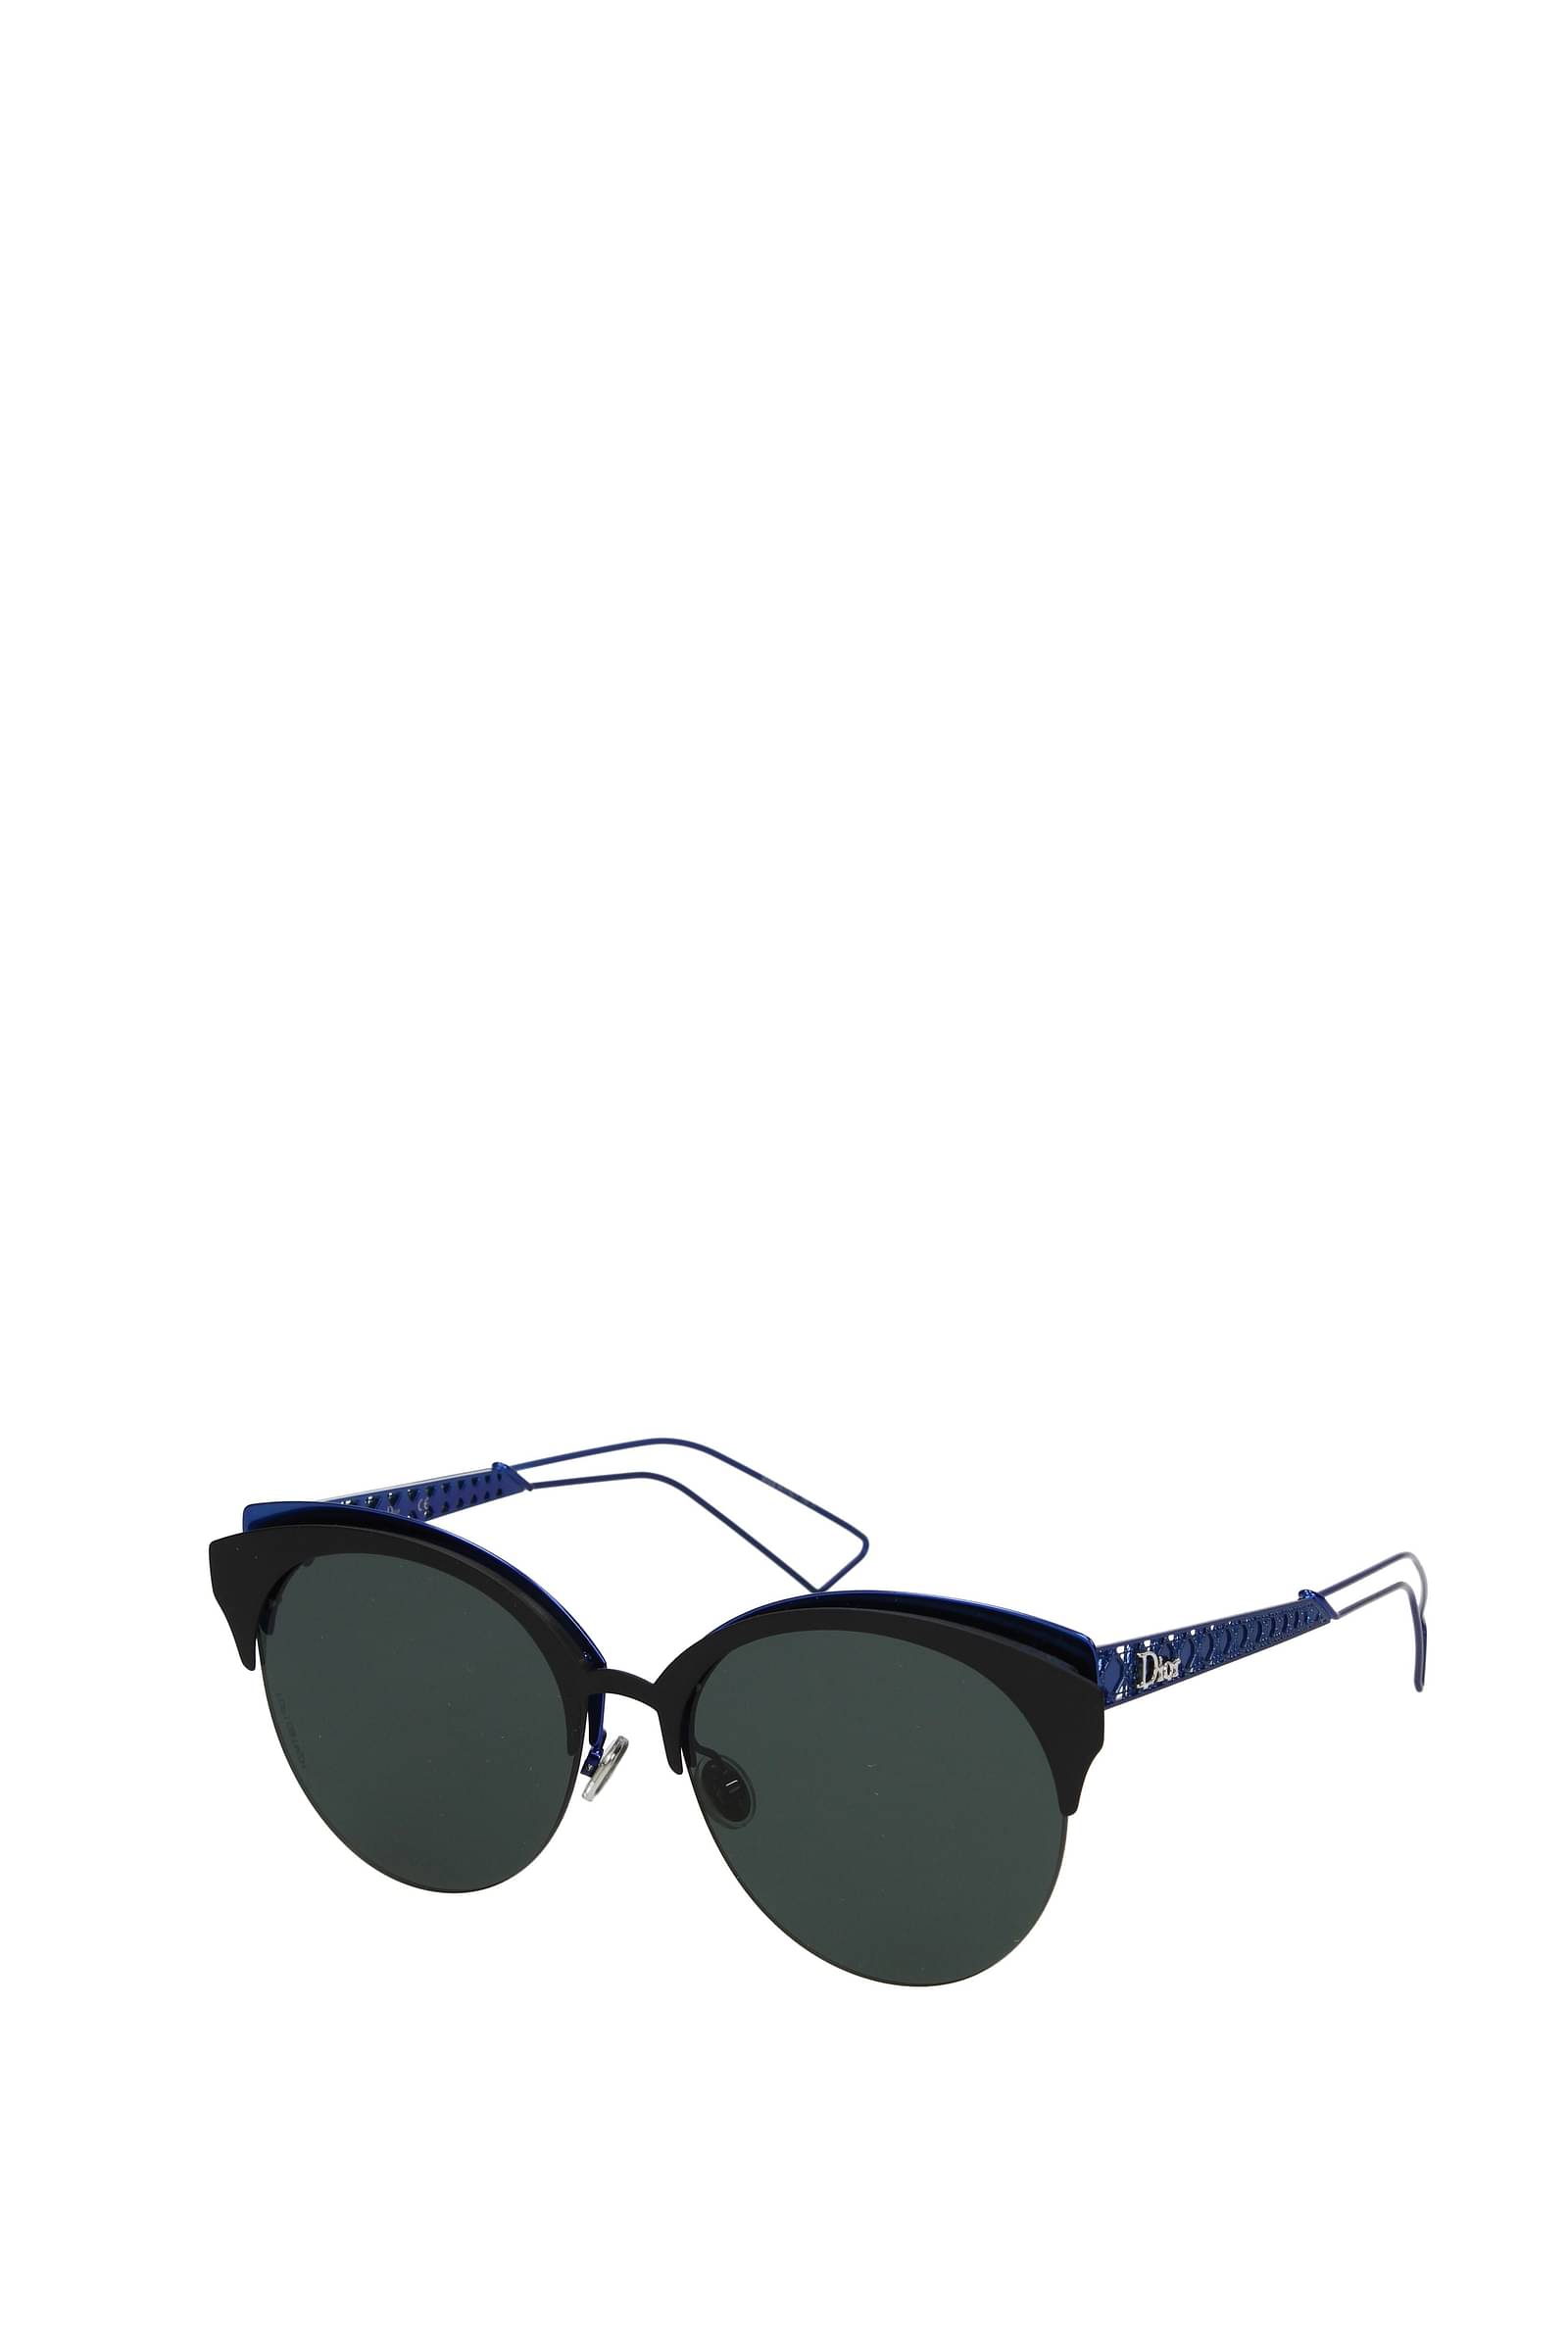 Designer Sunglasses for Women  Aviator Round Square  Cat Eye  DIOR HK